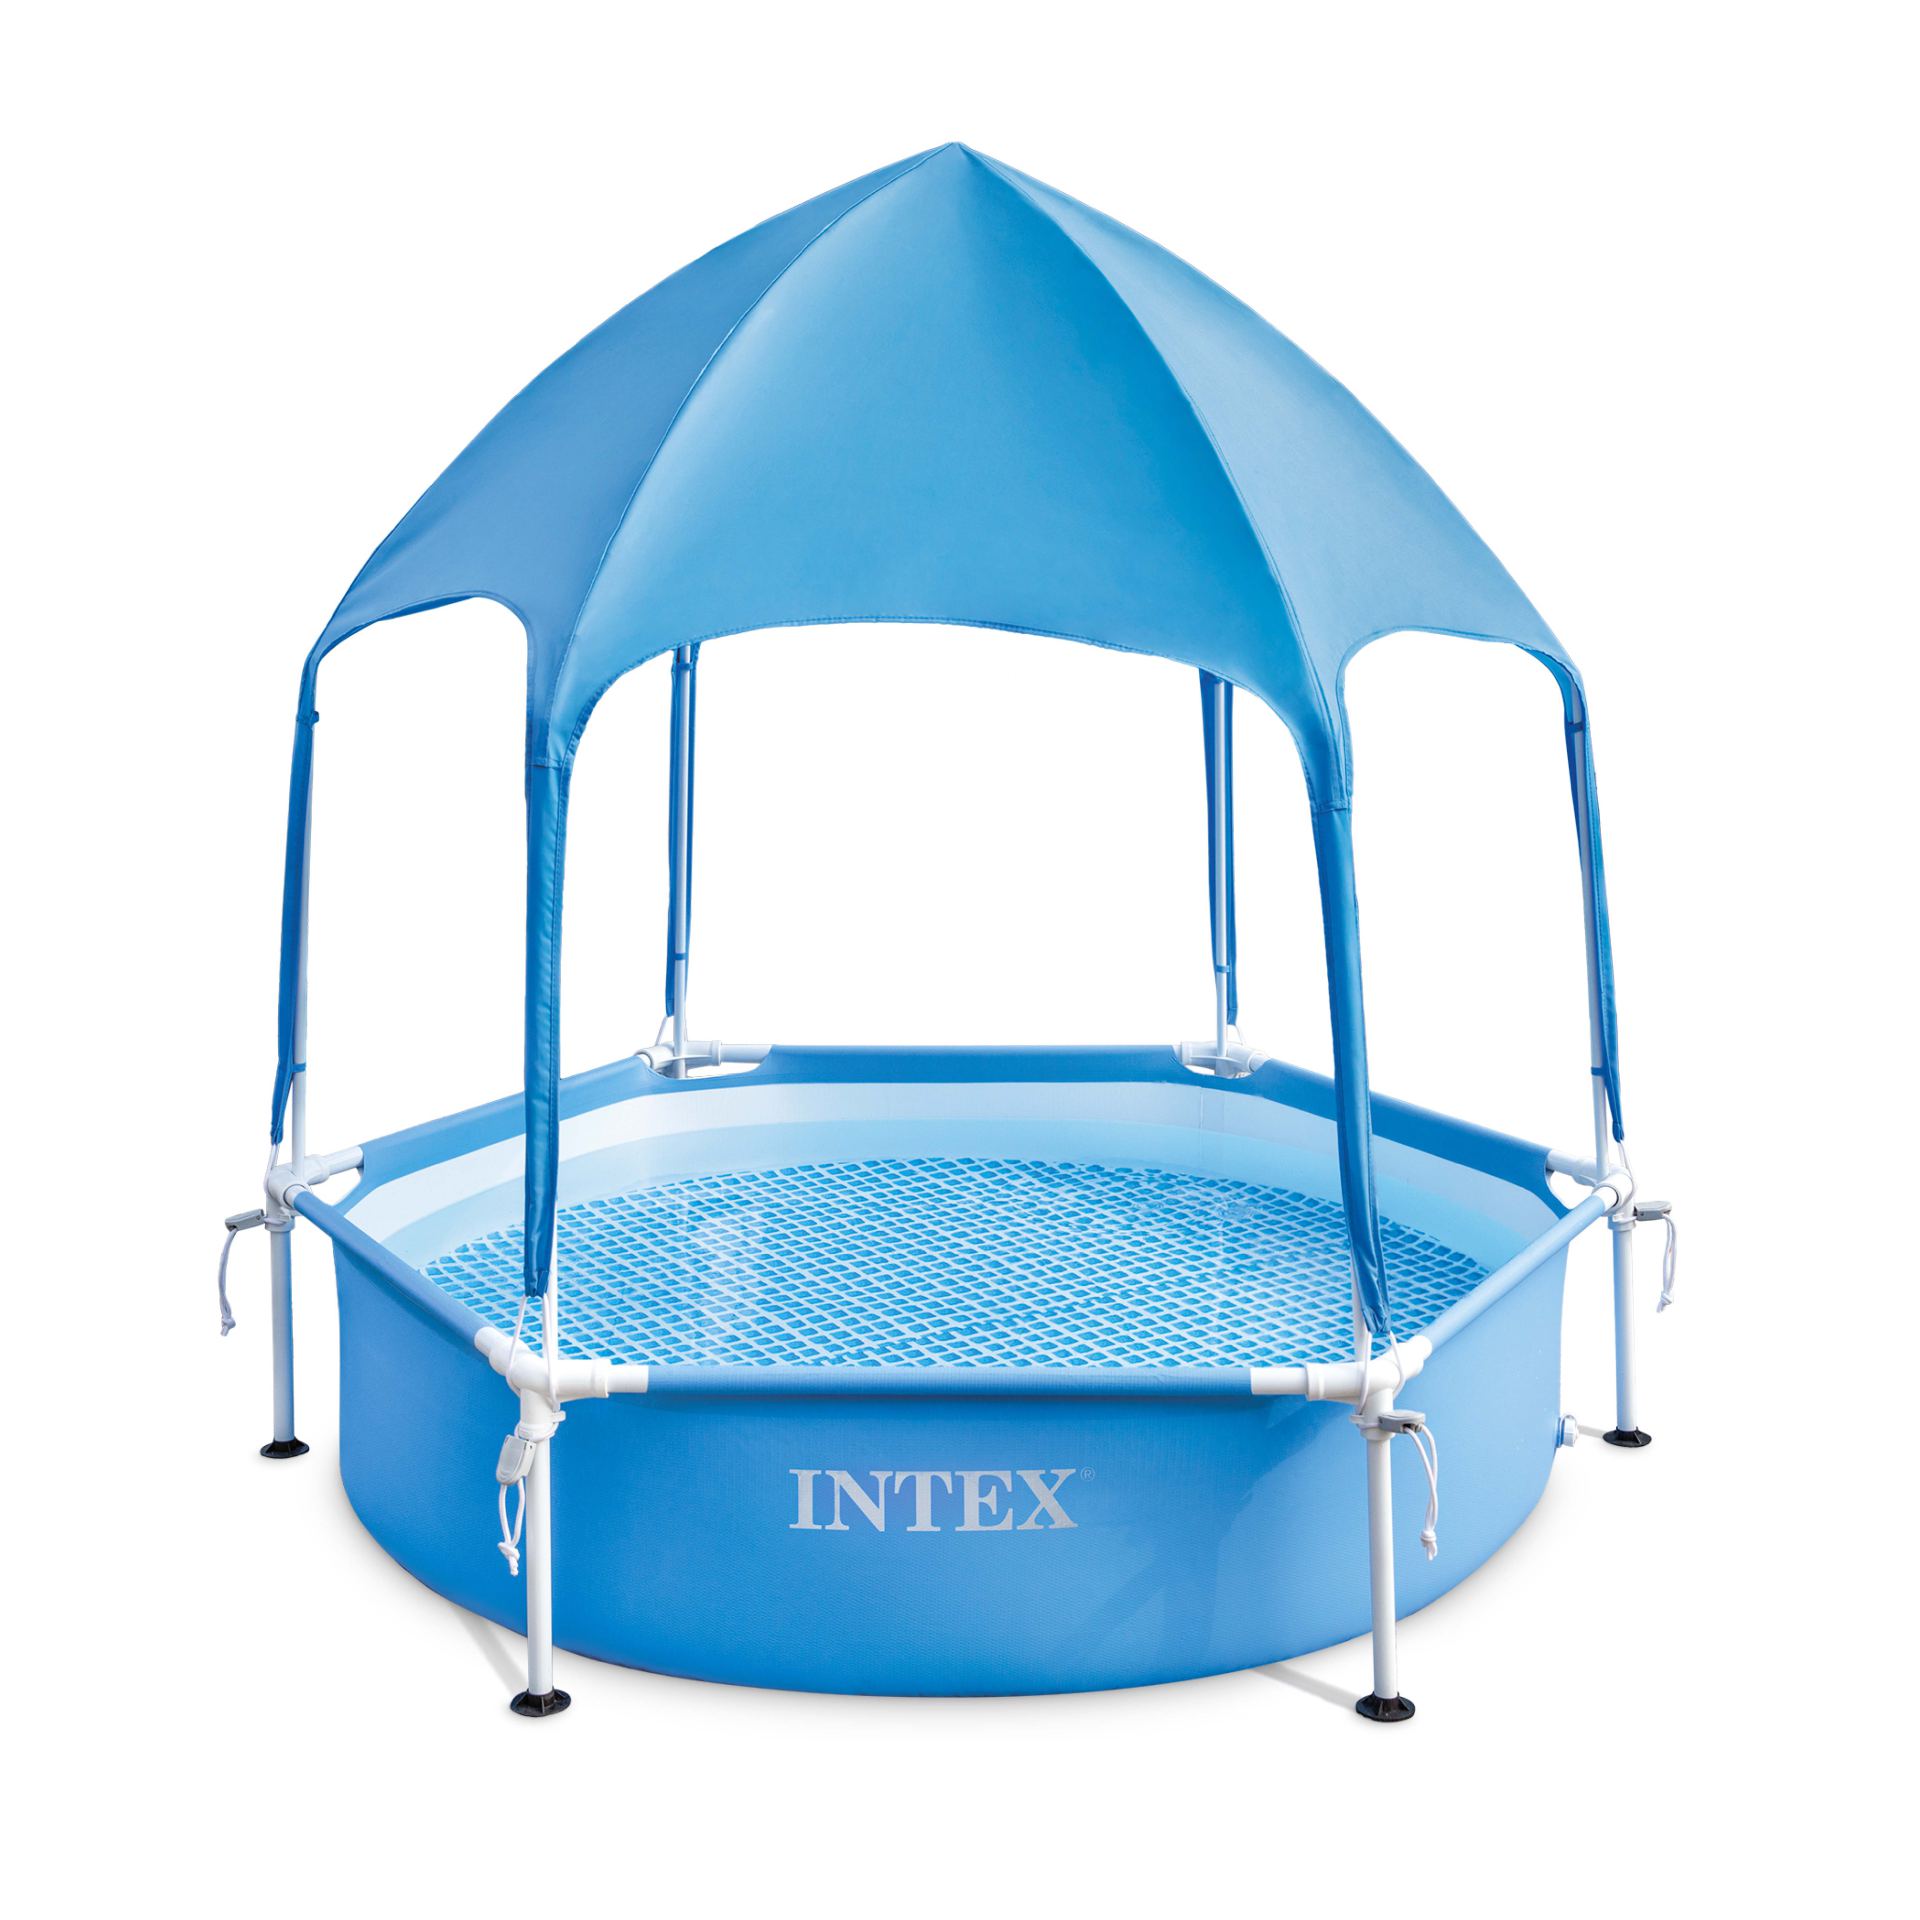 Intex Canopy metal frame pool 183cm x 38cm